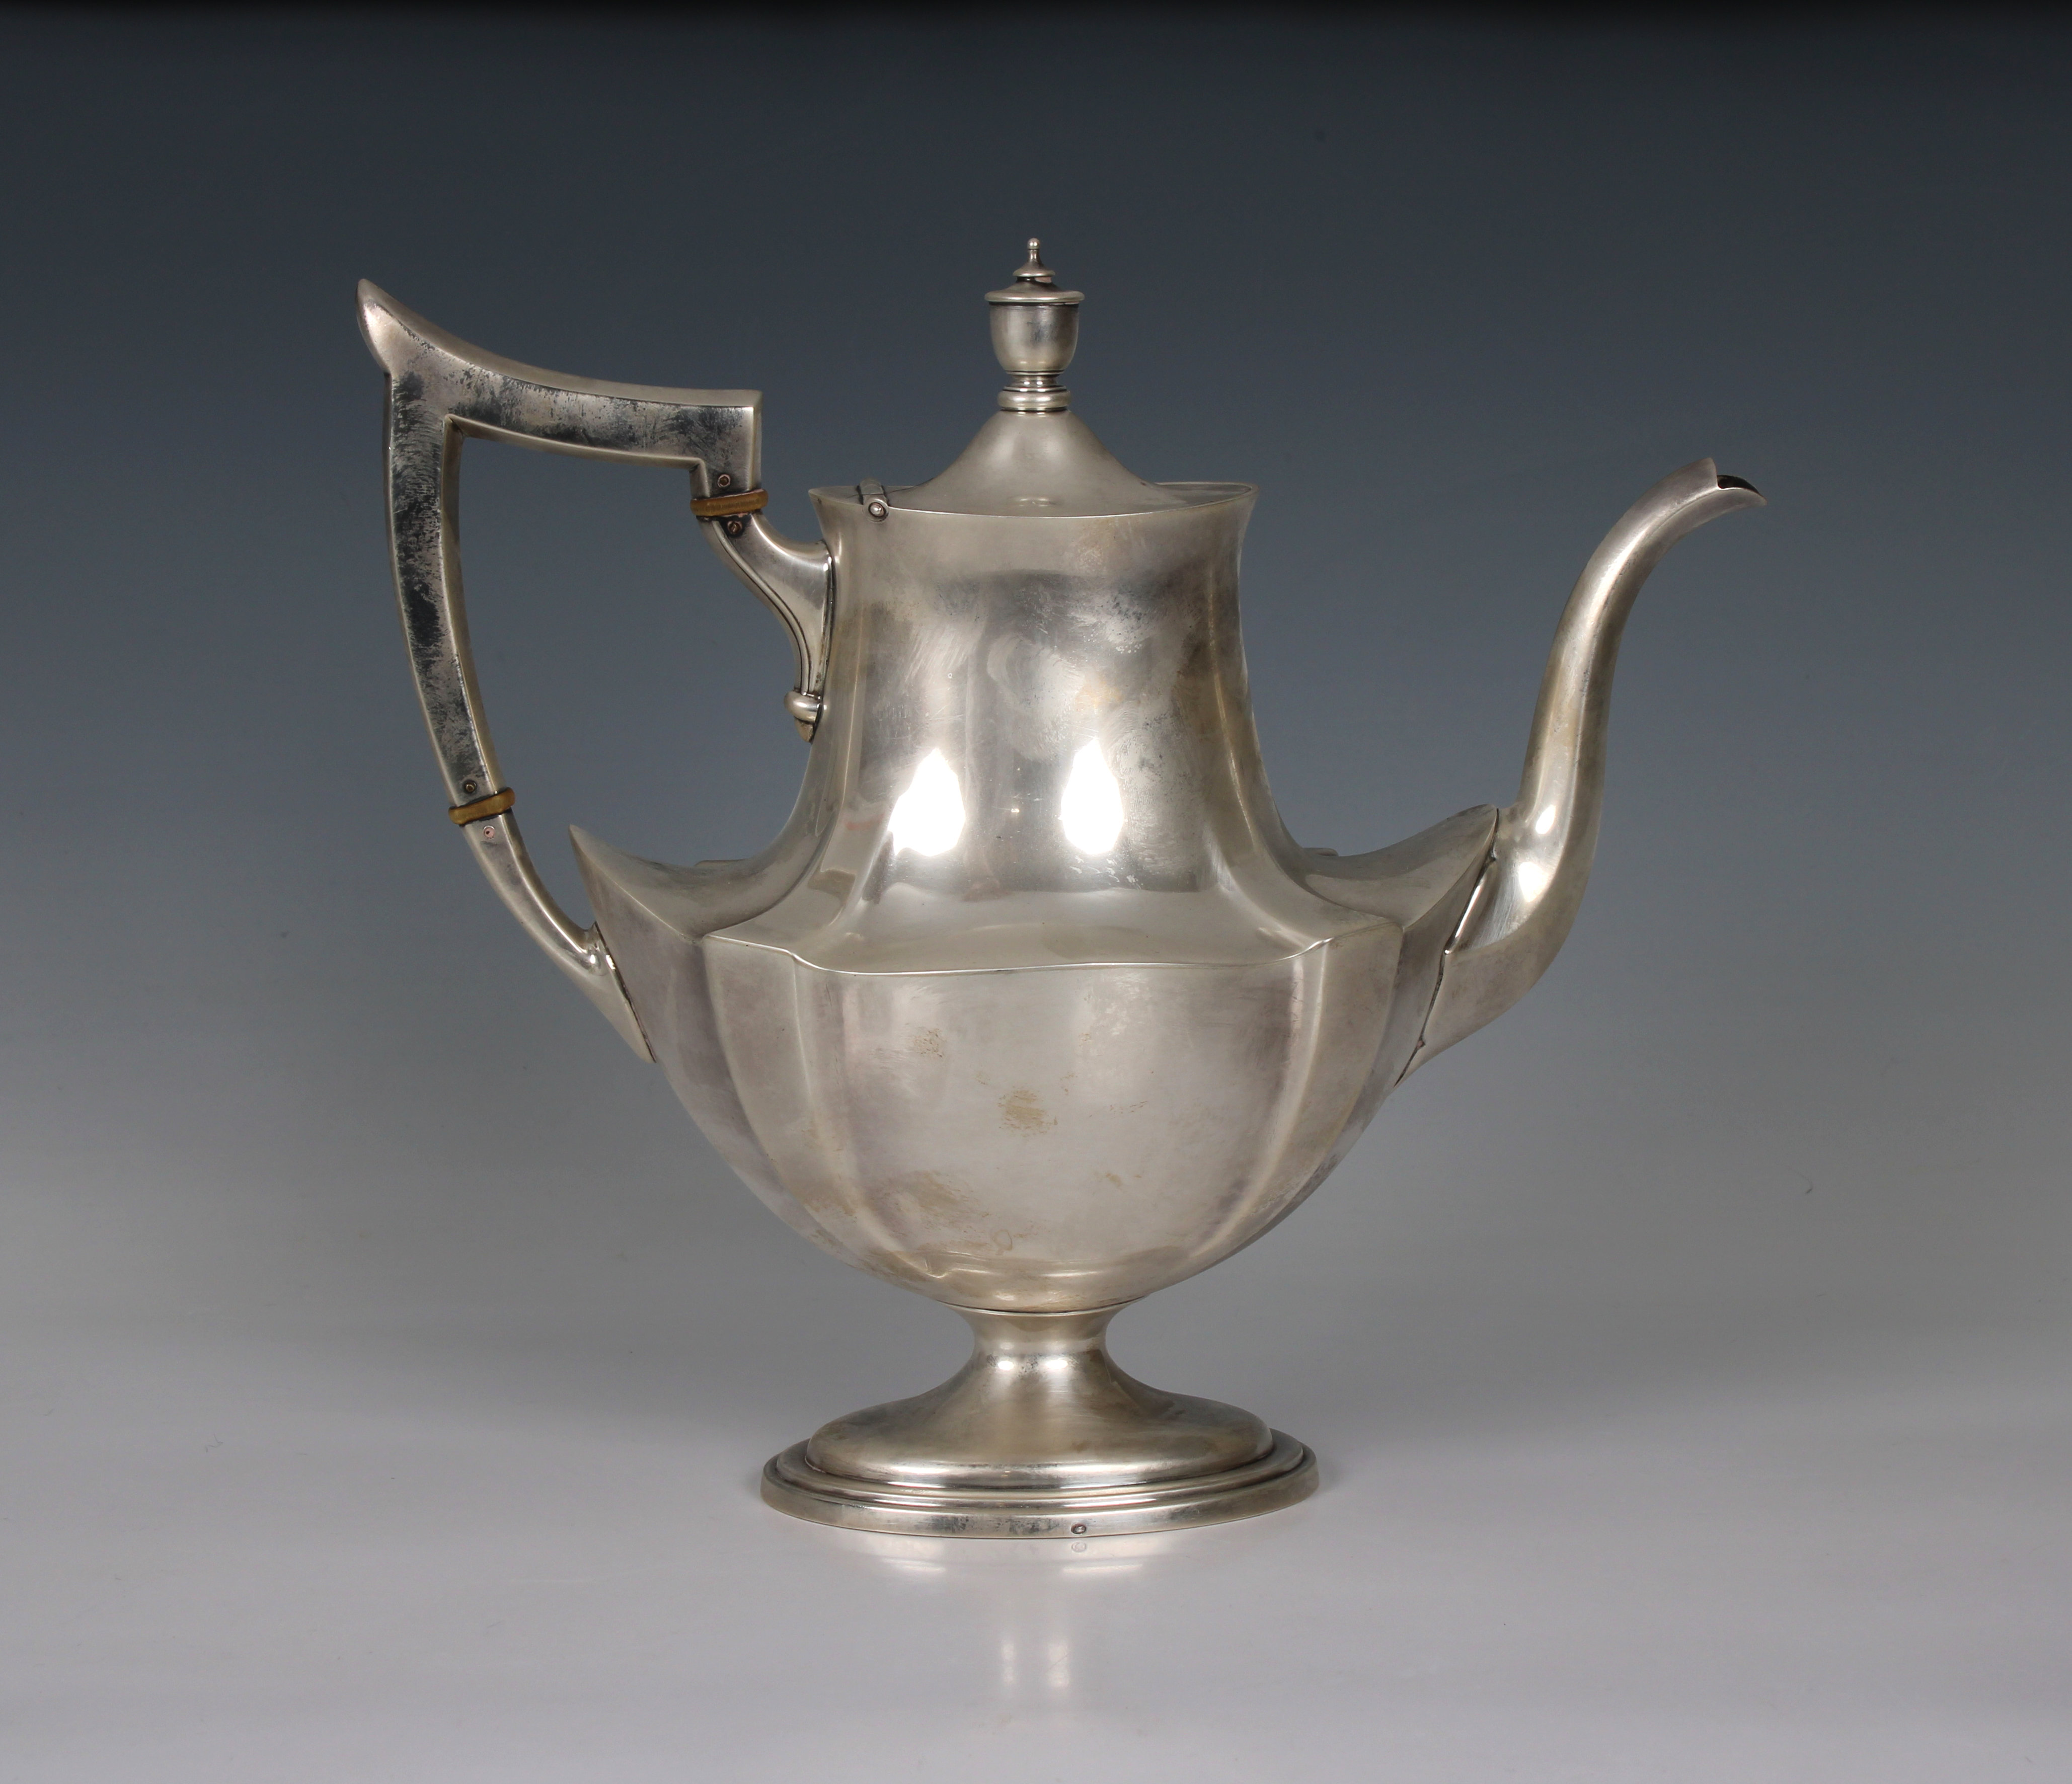 A 20th century Gorham "Plymouth" pattern sterling silver pedestal teapot